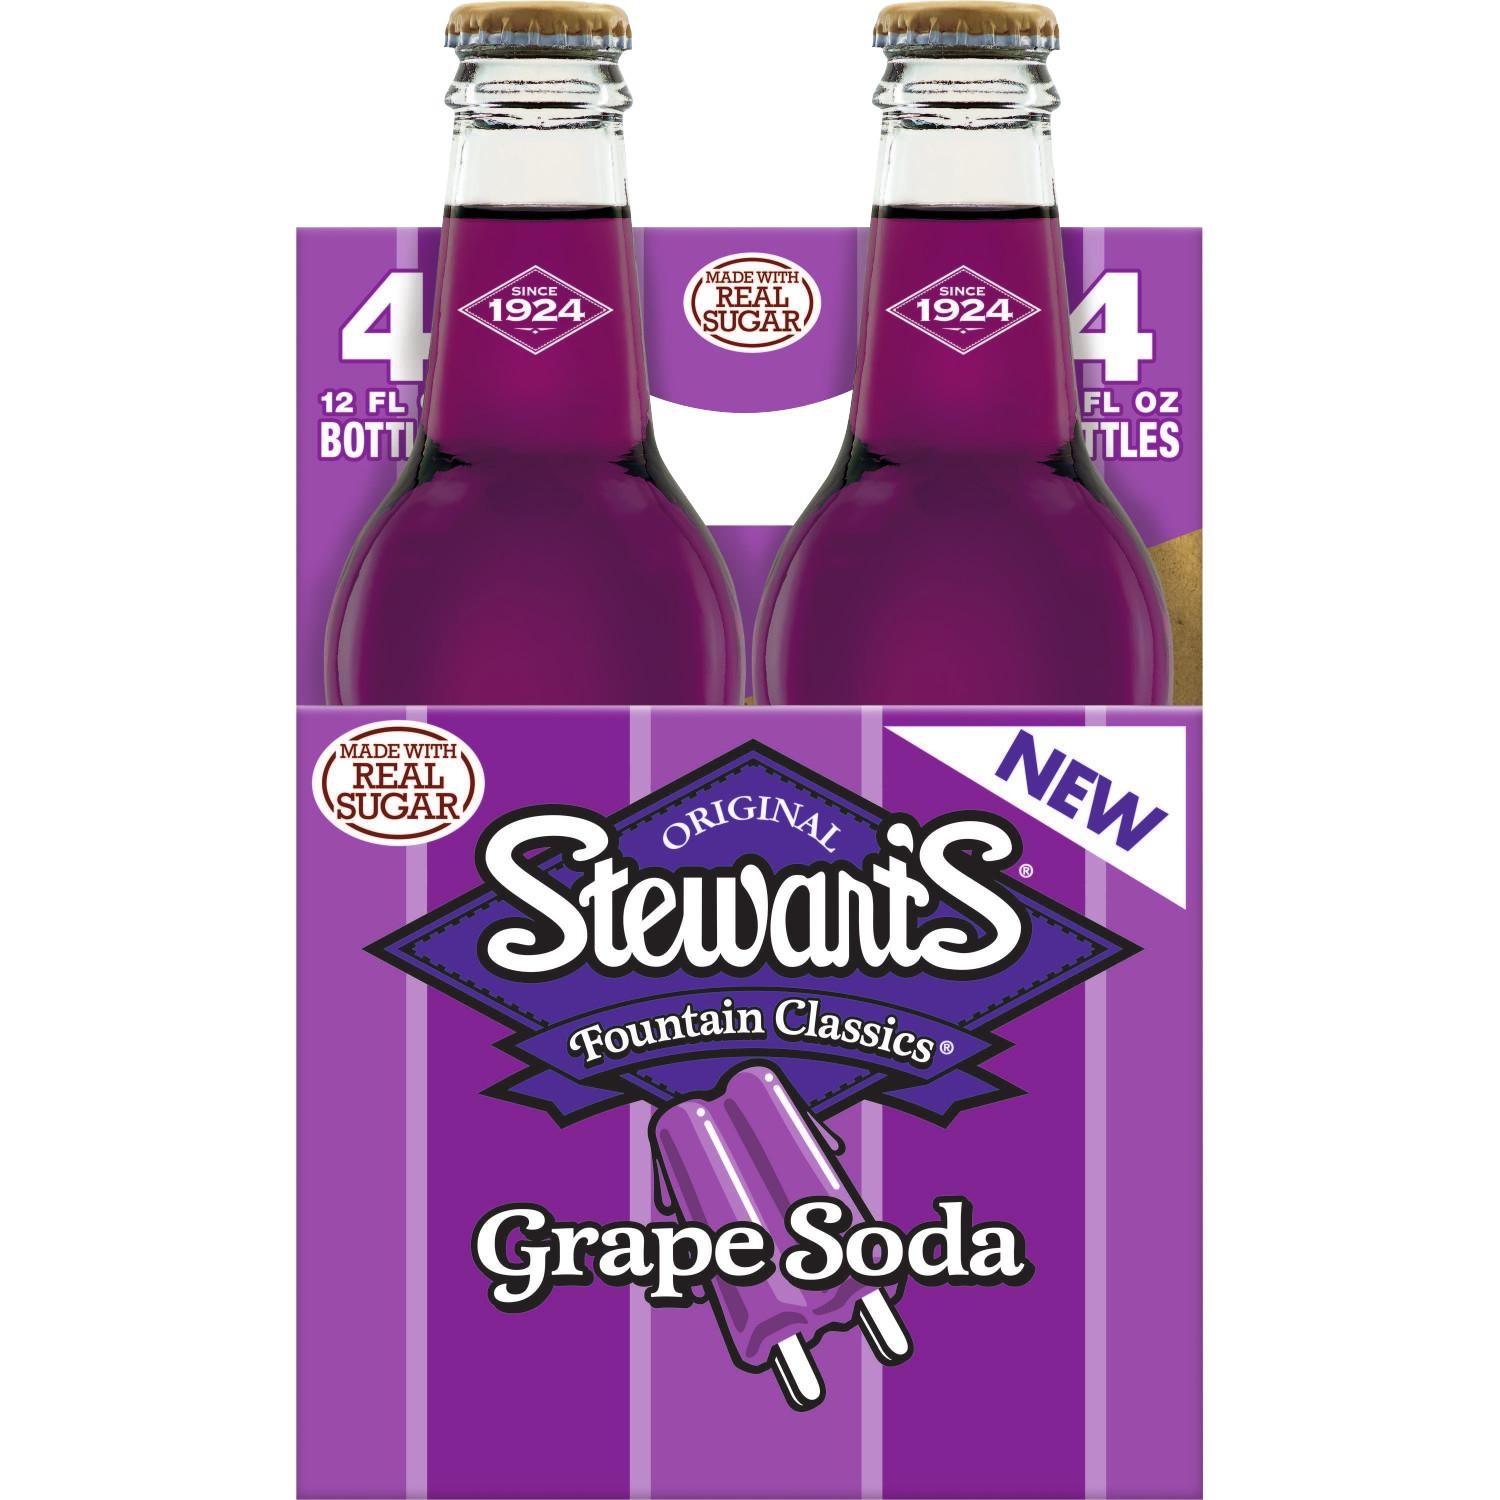 Stewart's Original Fountain Classics Grape Soda